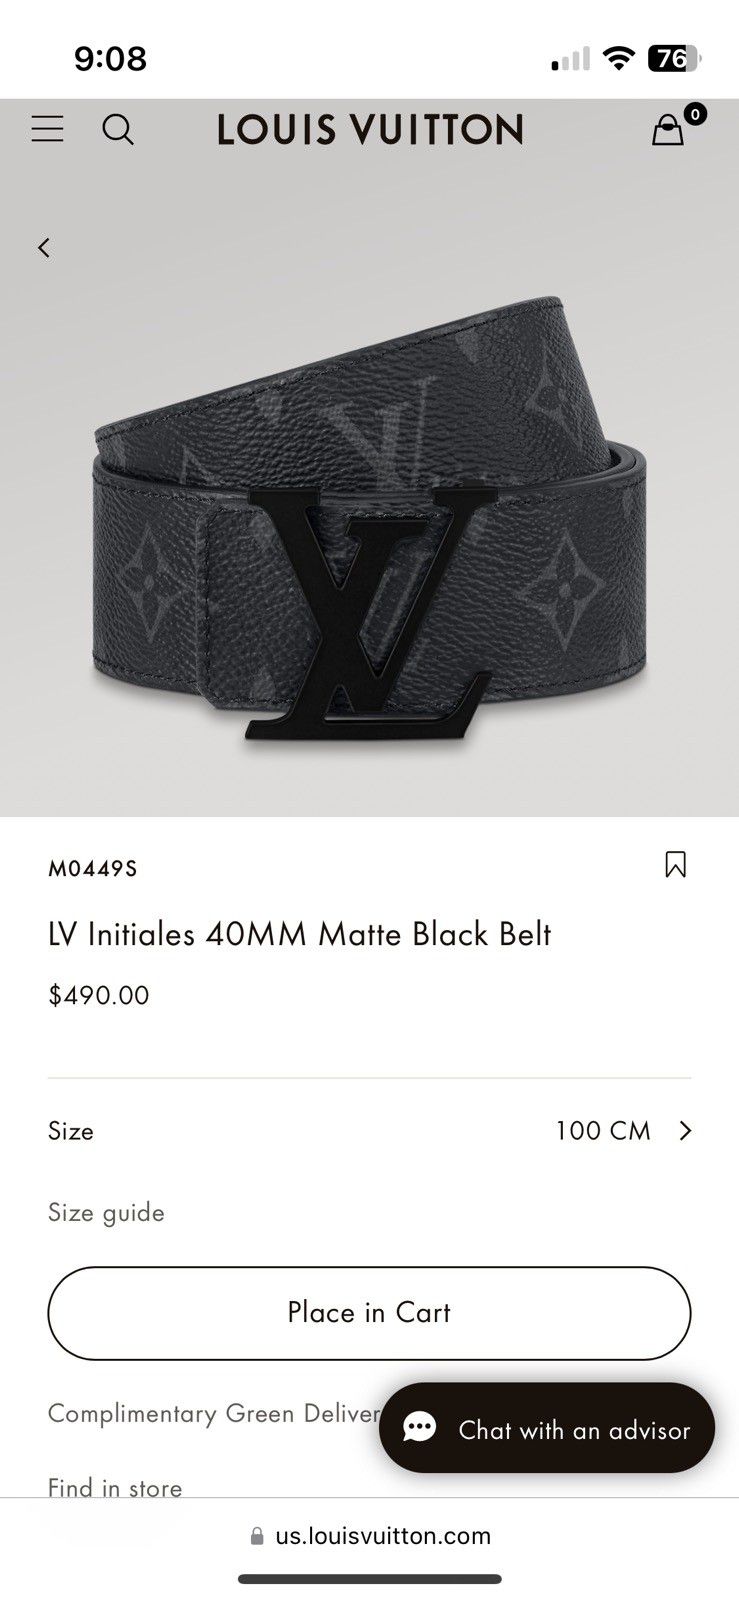 LV Initiales 40MM Matte Black Belt for Sale in P C Beach, FL - OfferUp